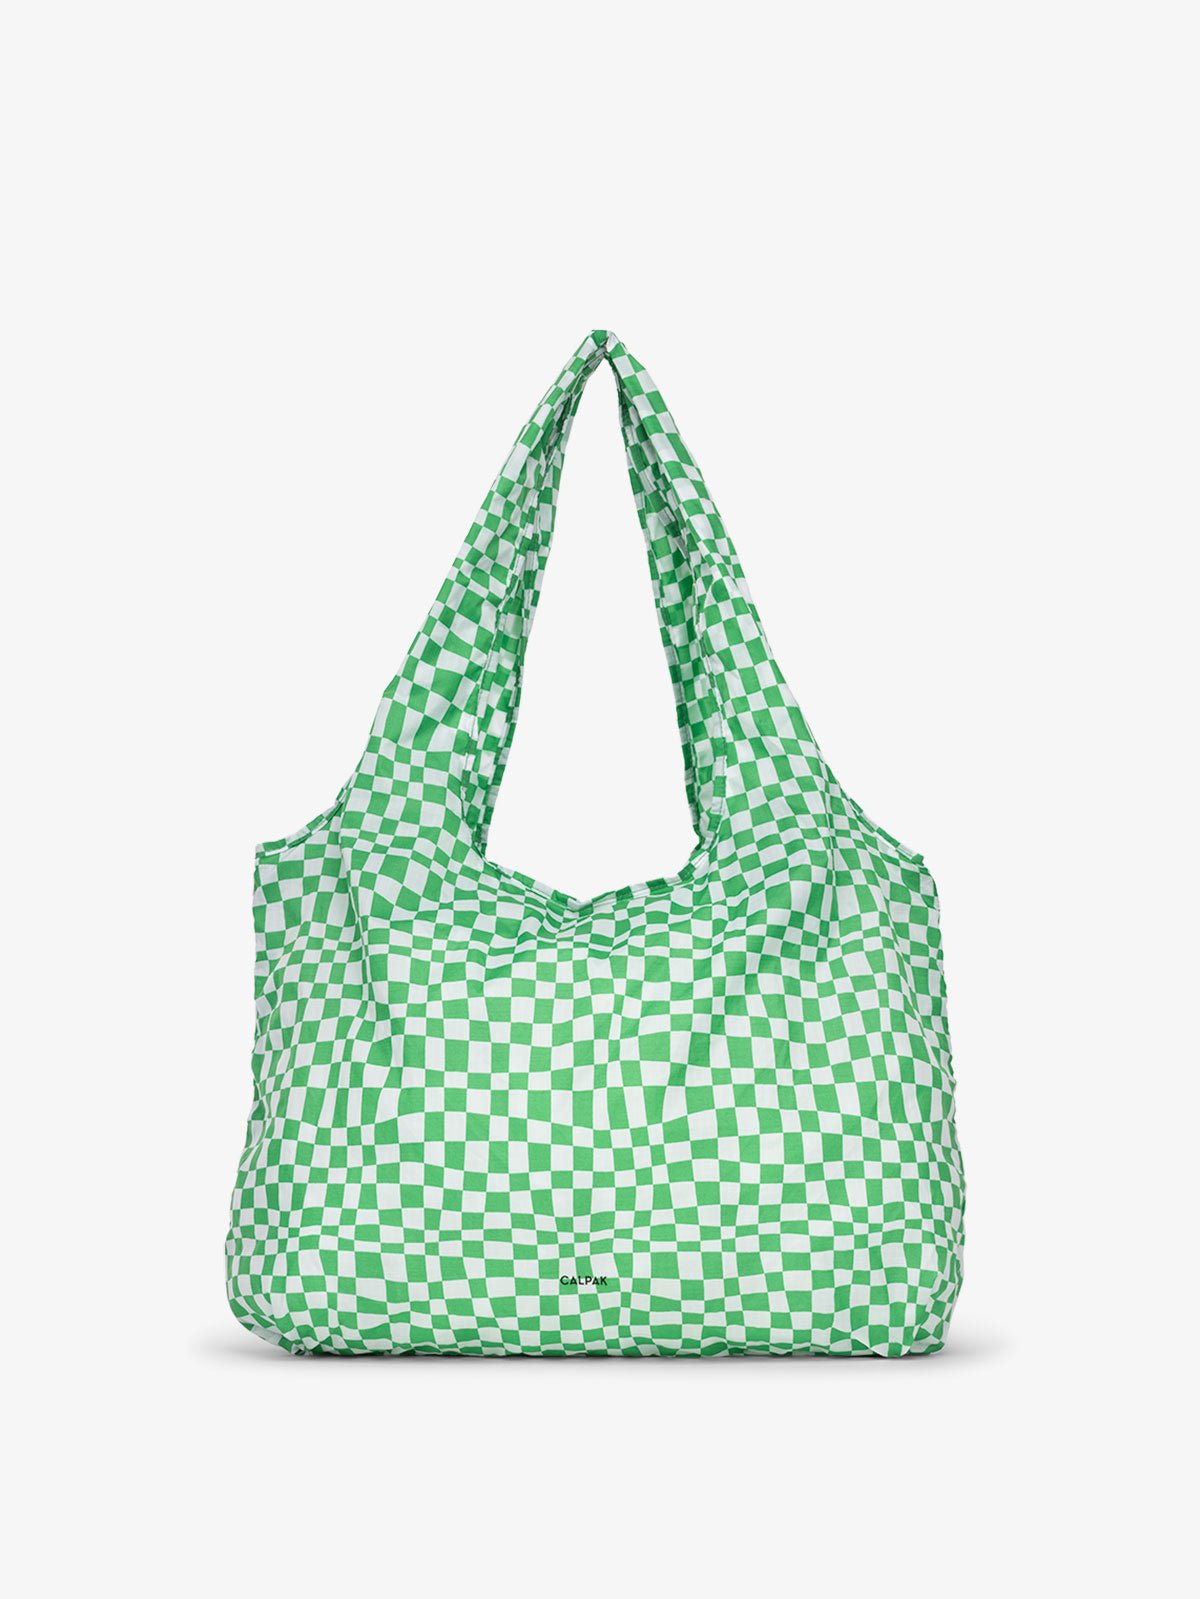 CALPAK Compakt tote bag in green checkerboard